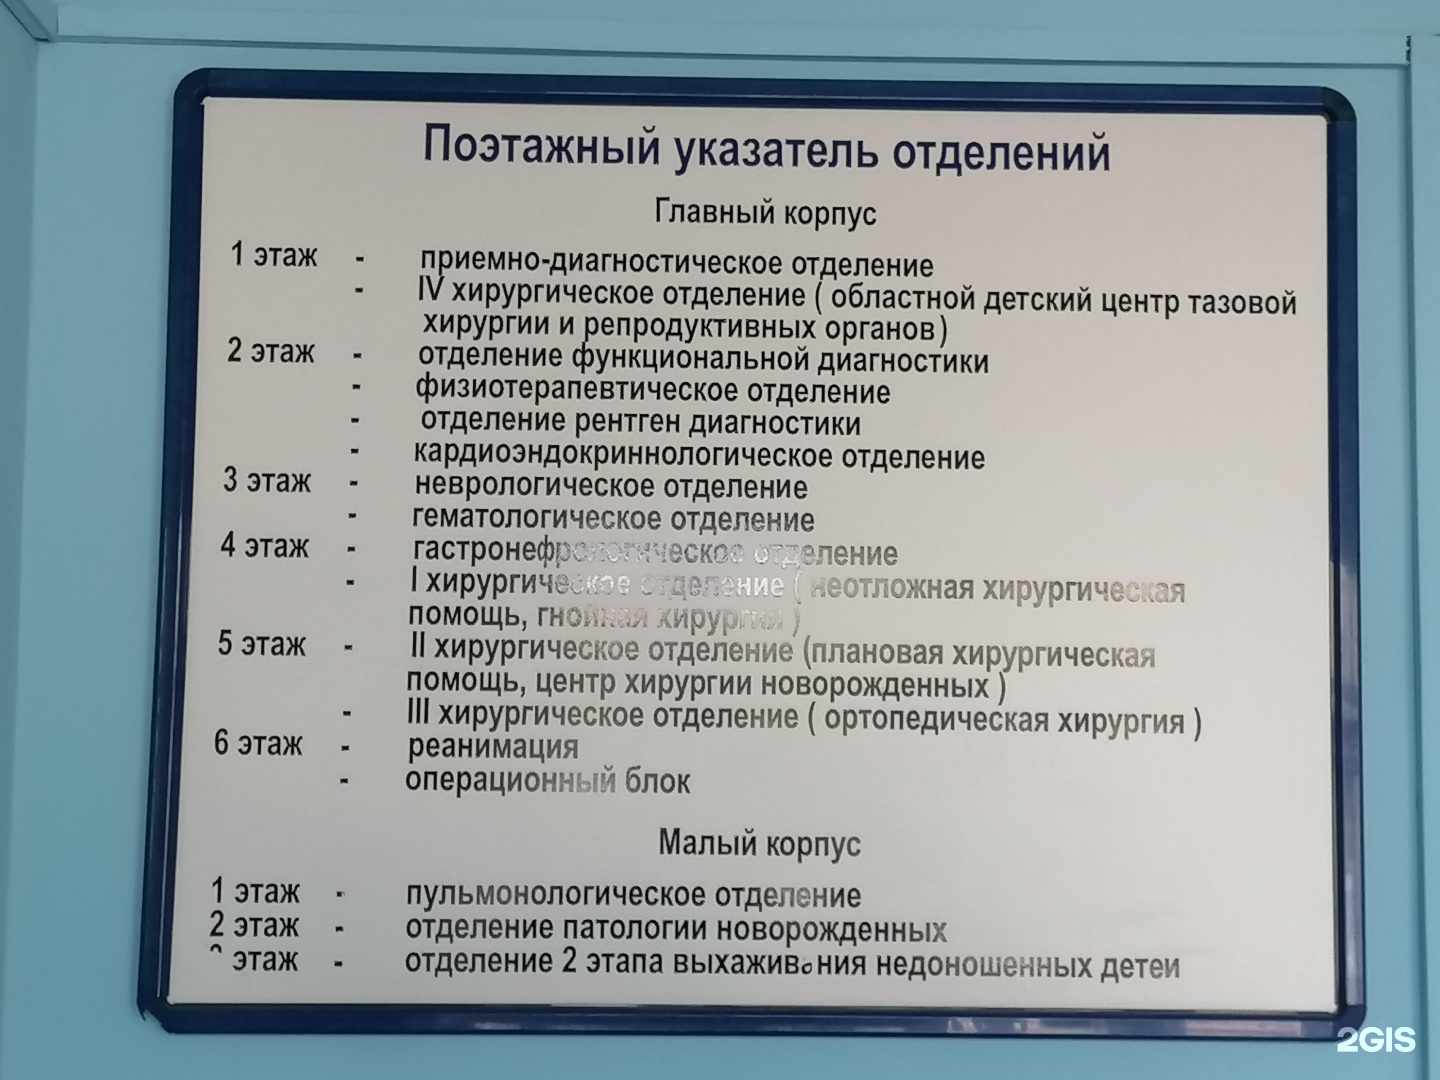 Куйбышев больница регистратура